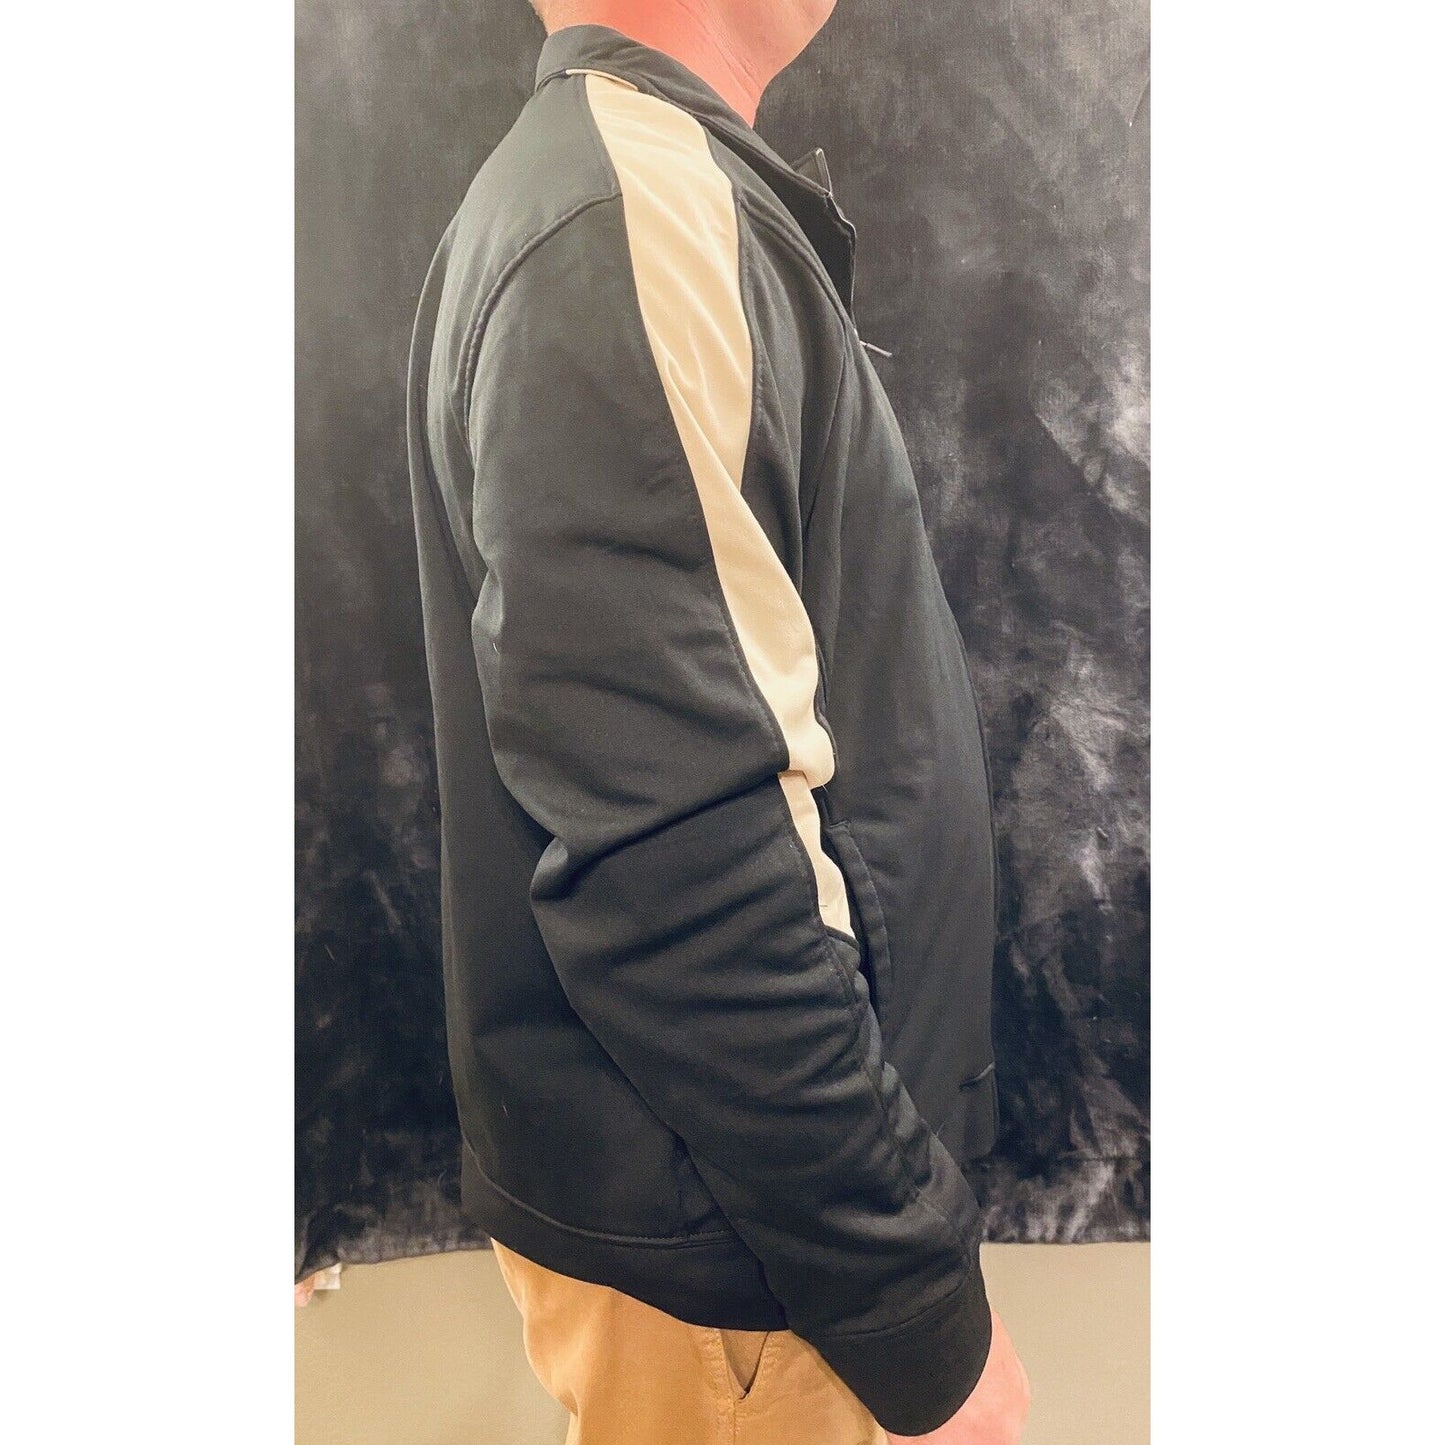 Augusta Sportswear Large Full-Zip Black Fleece Graphic (tiger on Ball) Jacket.